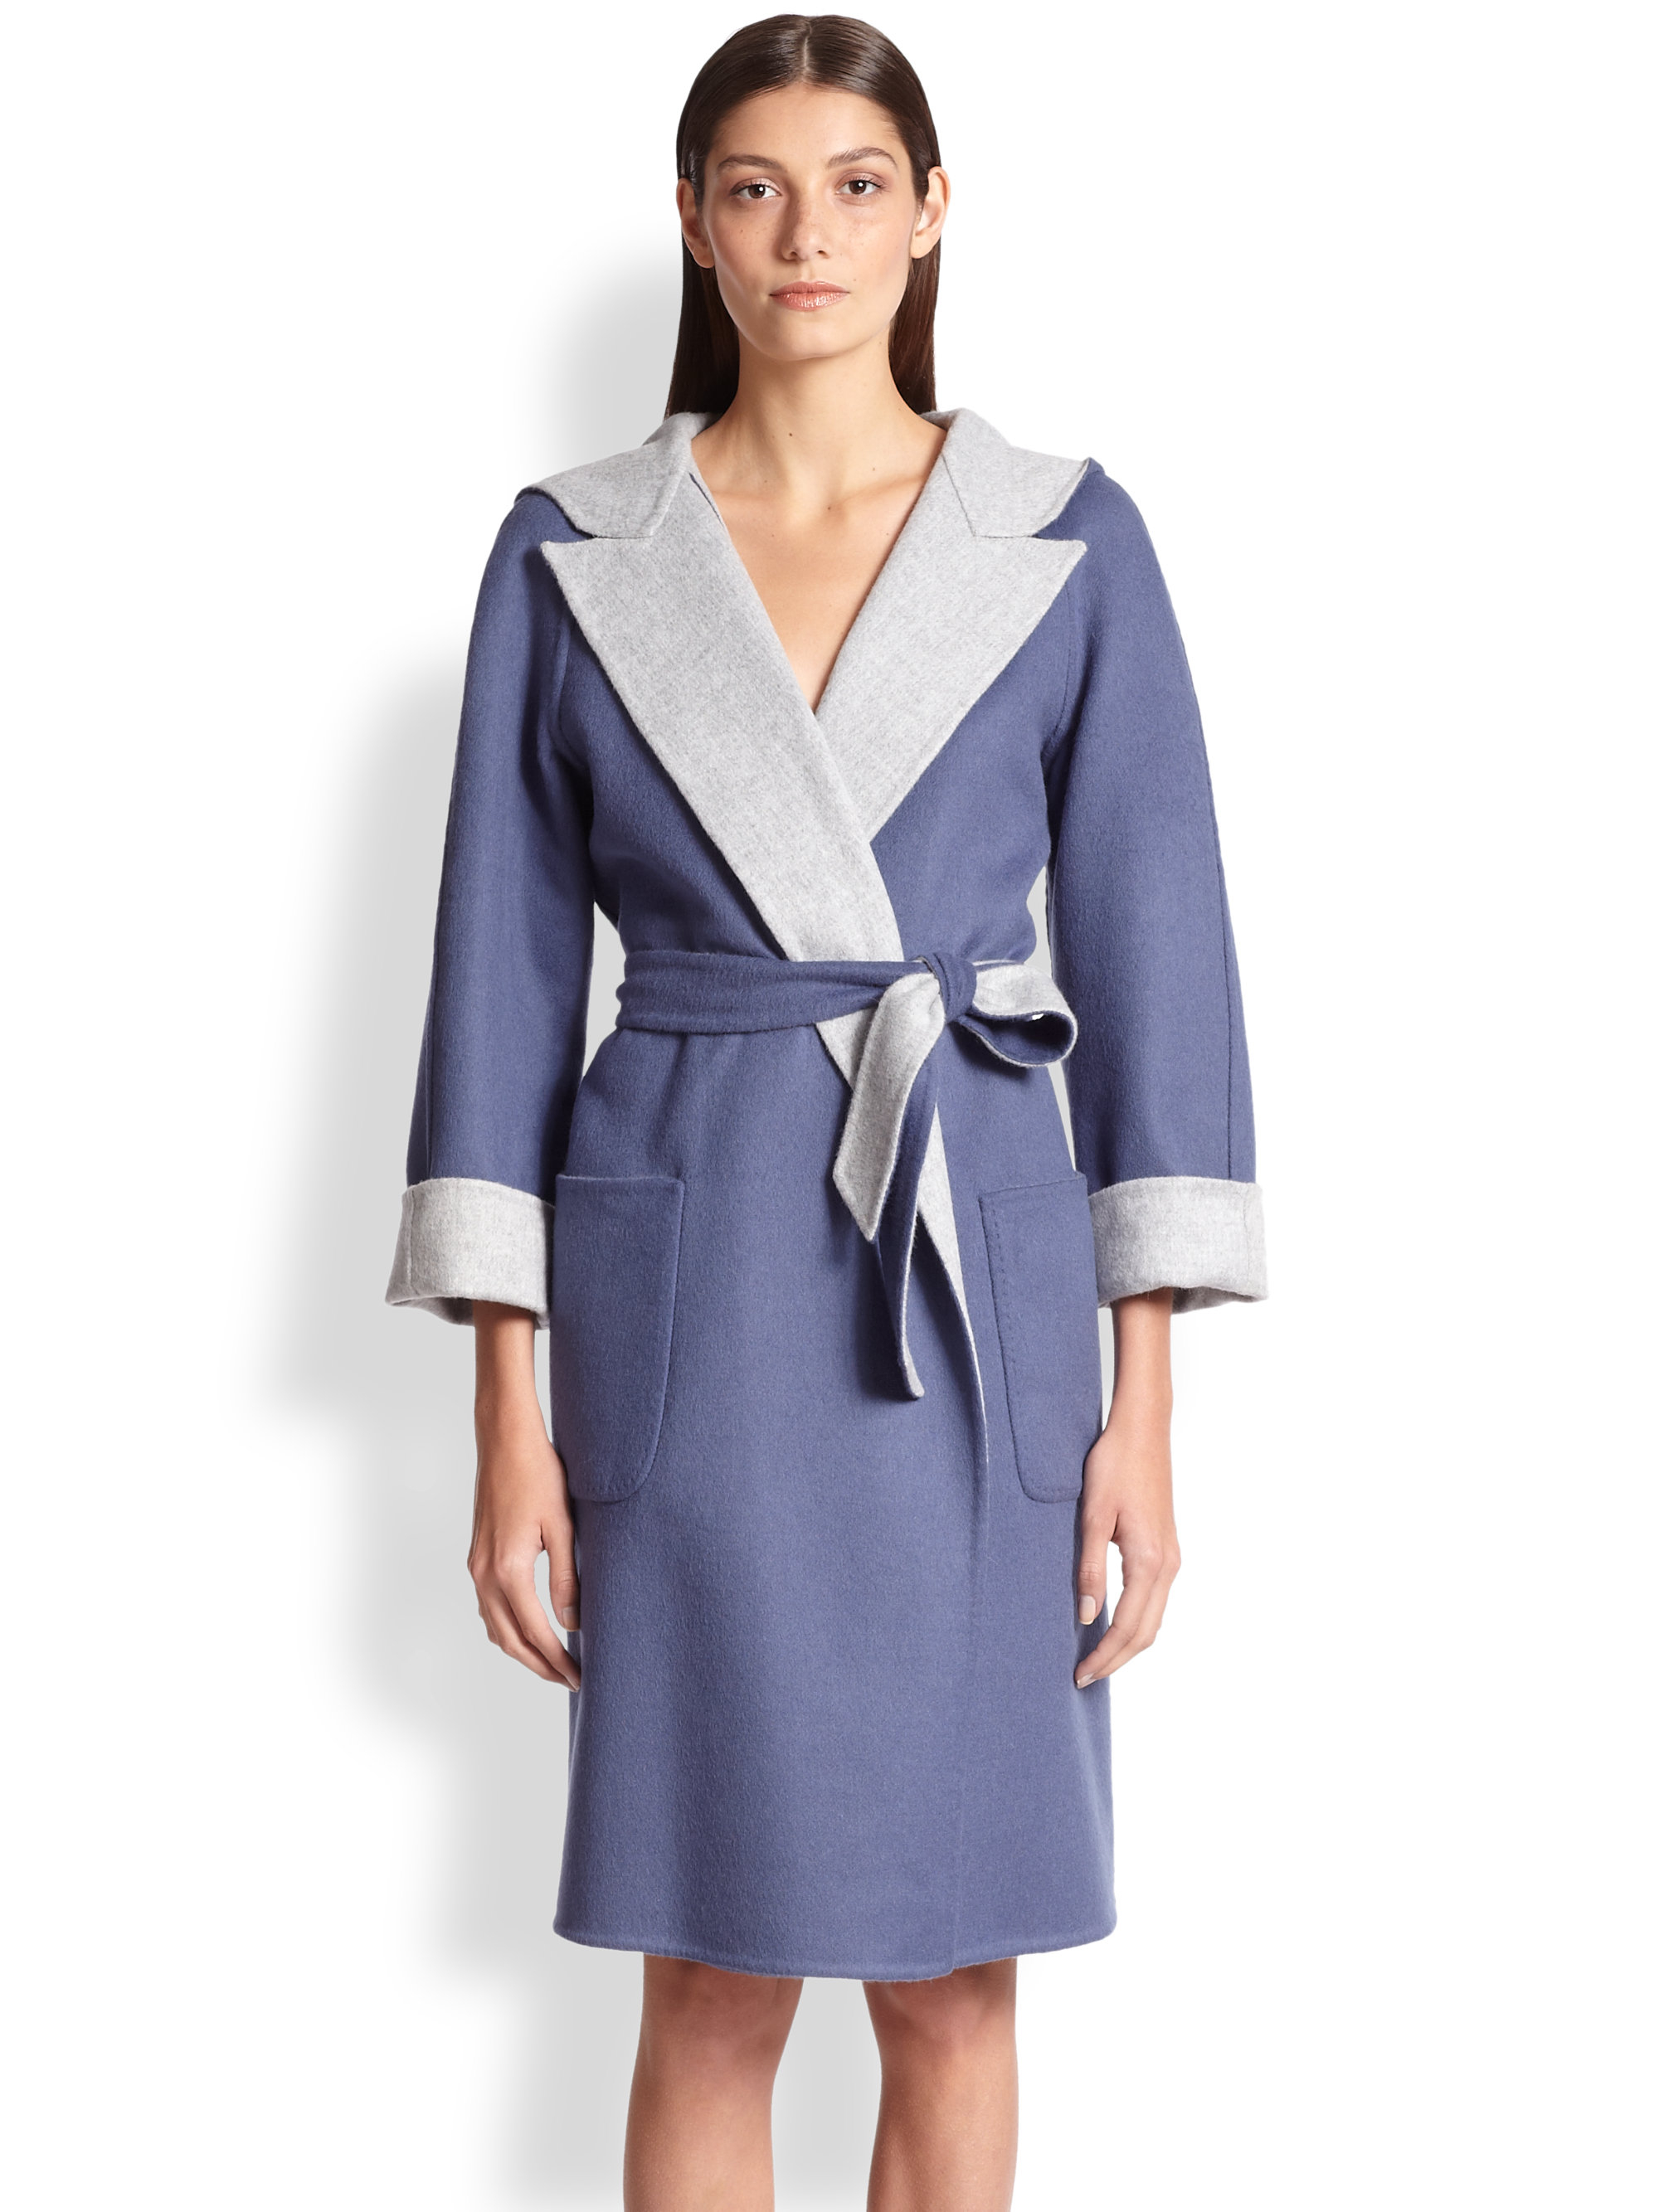 Lyst - Max Mara Double-Face Wool/Angora Reversible Wrap Coat in Blue